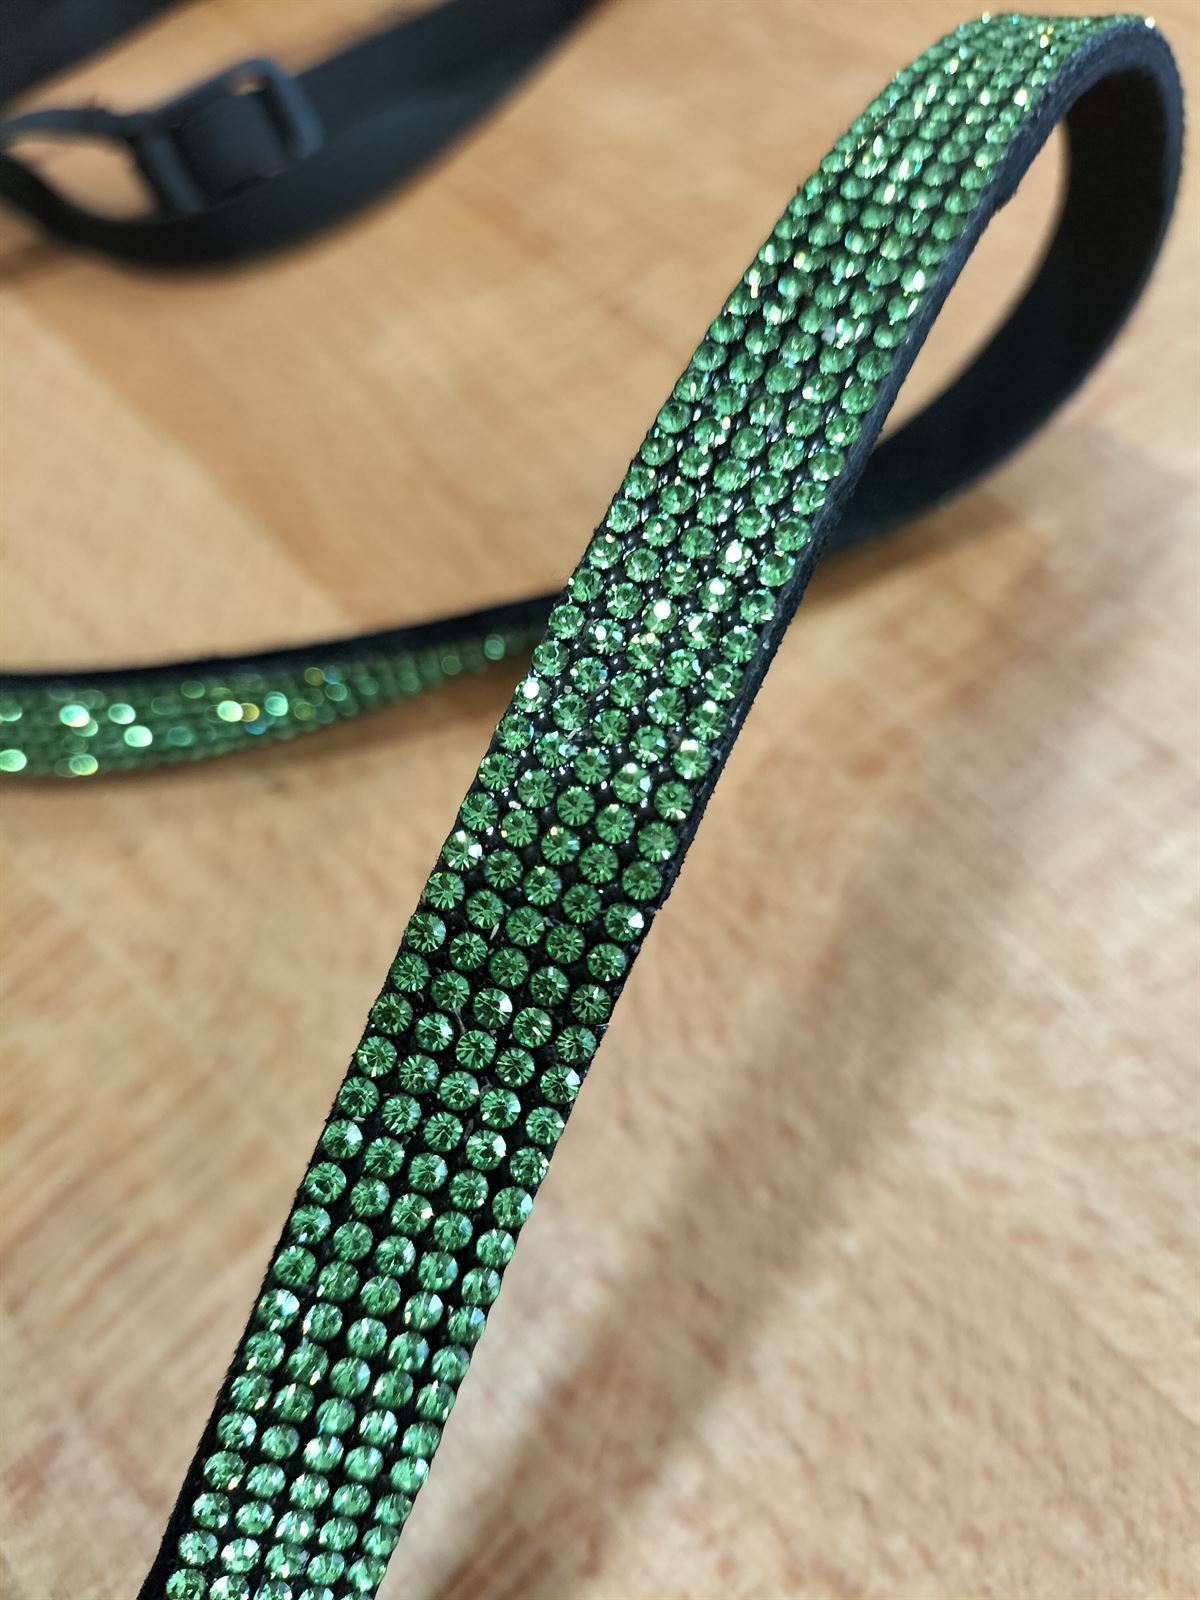 Adorno silla CASTECUS cinta decorativa trasera cristales verdes - Imagen 3